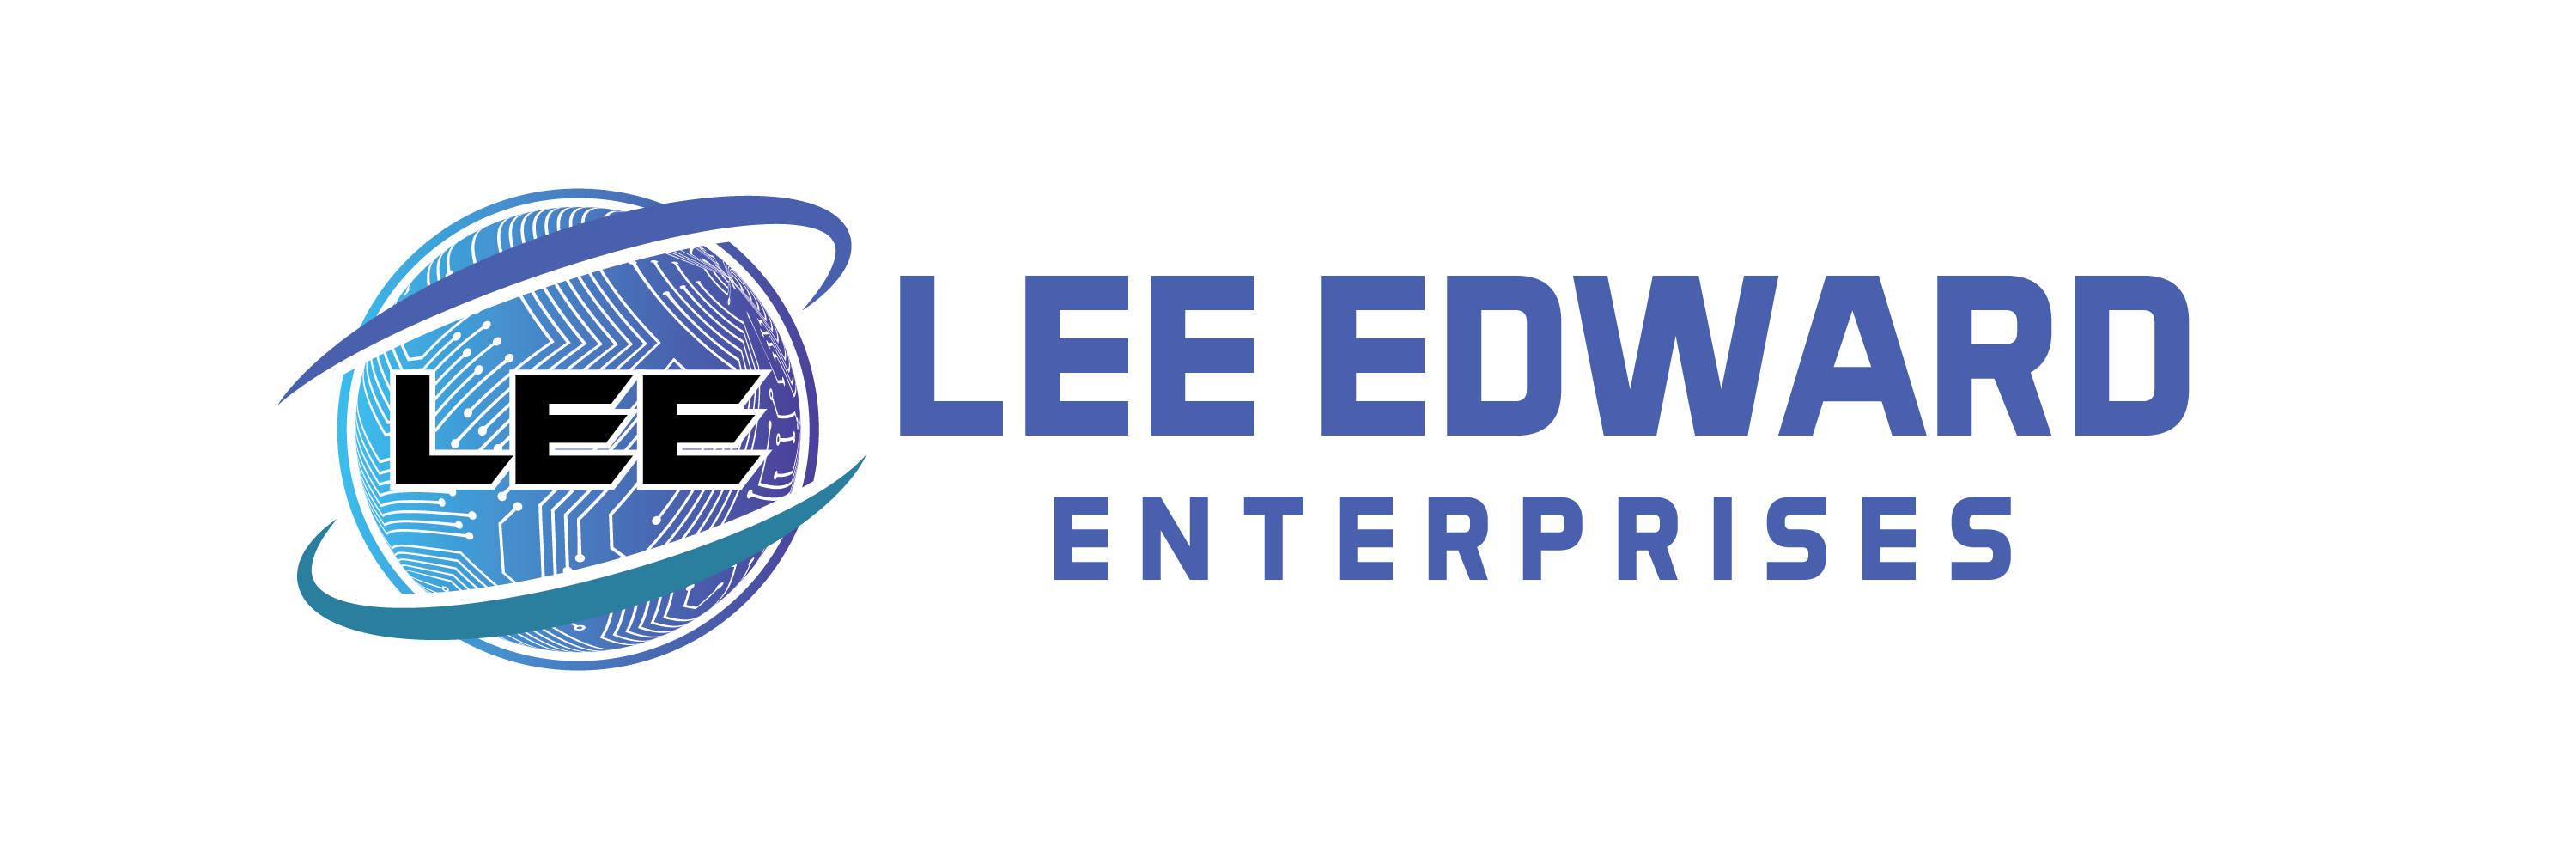 Lee Edward Enterprises